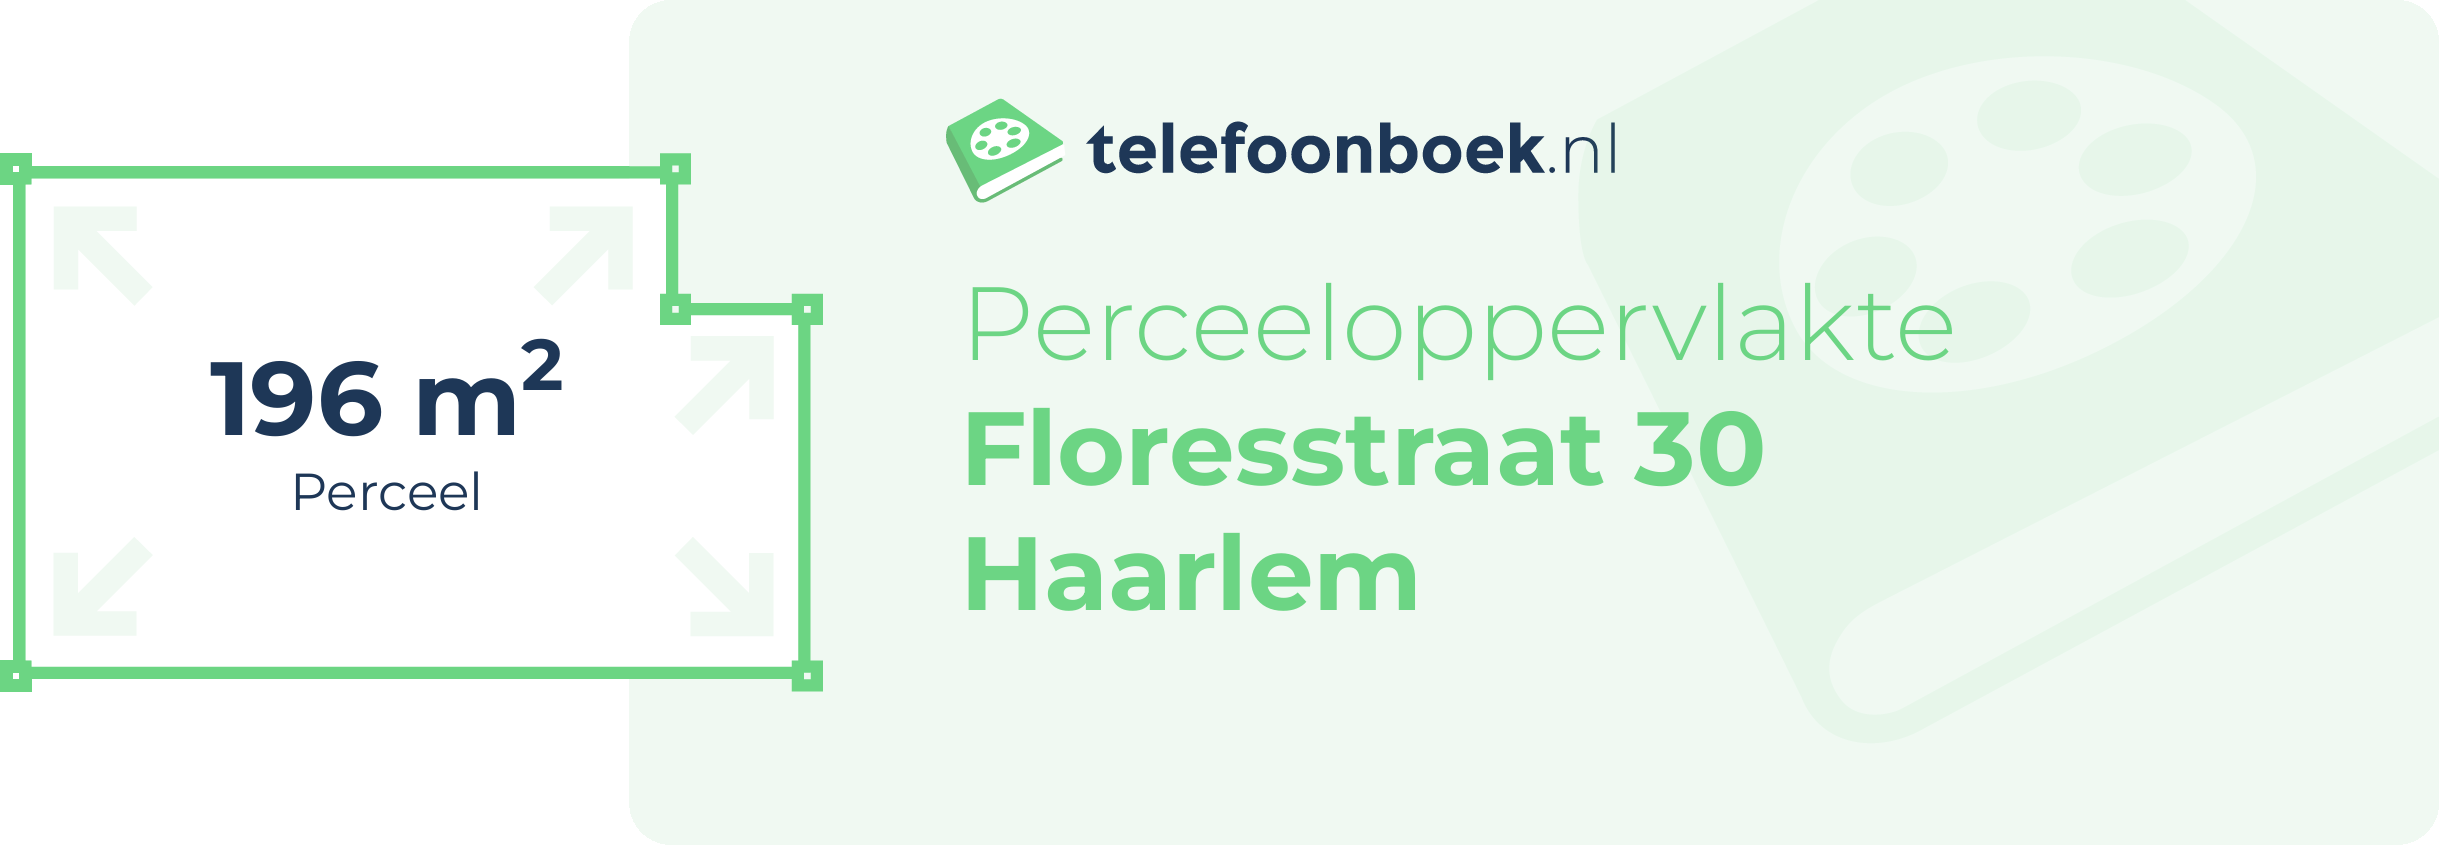 Perceeloppervlakte Floresstraat 30 Haarlem